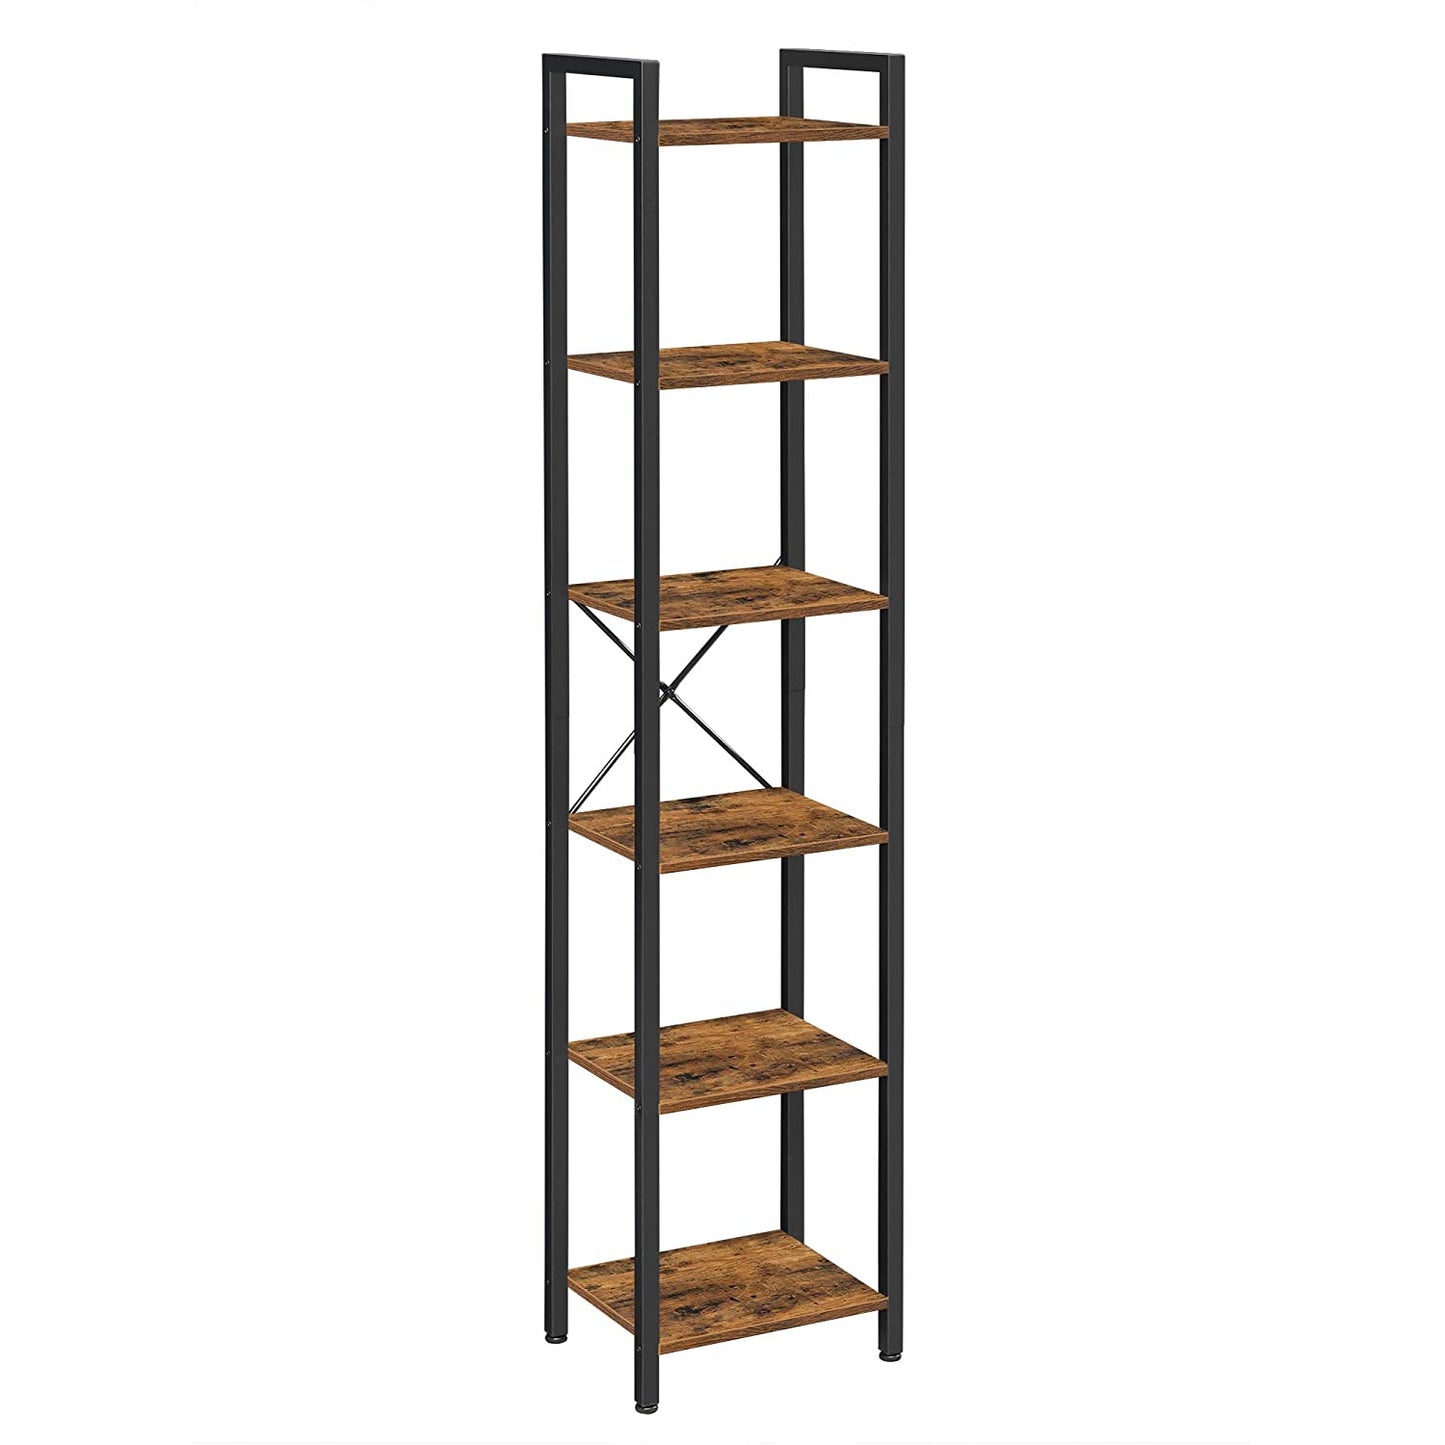 Nancy's Covina Storage Rack - Bookshelf - Open Cabinet - 6 Levels - Vintage - Industrial - Brown - Processed Wood - Metal - 40 x 30 x 178.6 cm